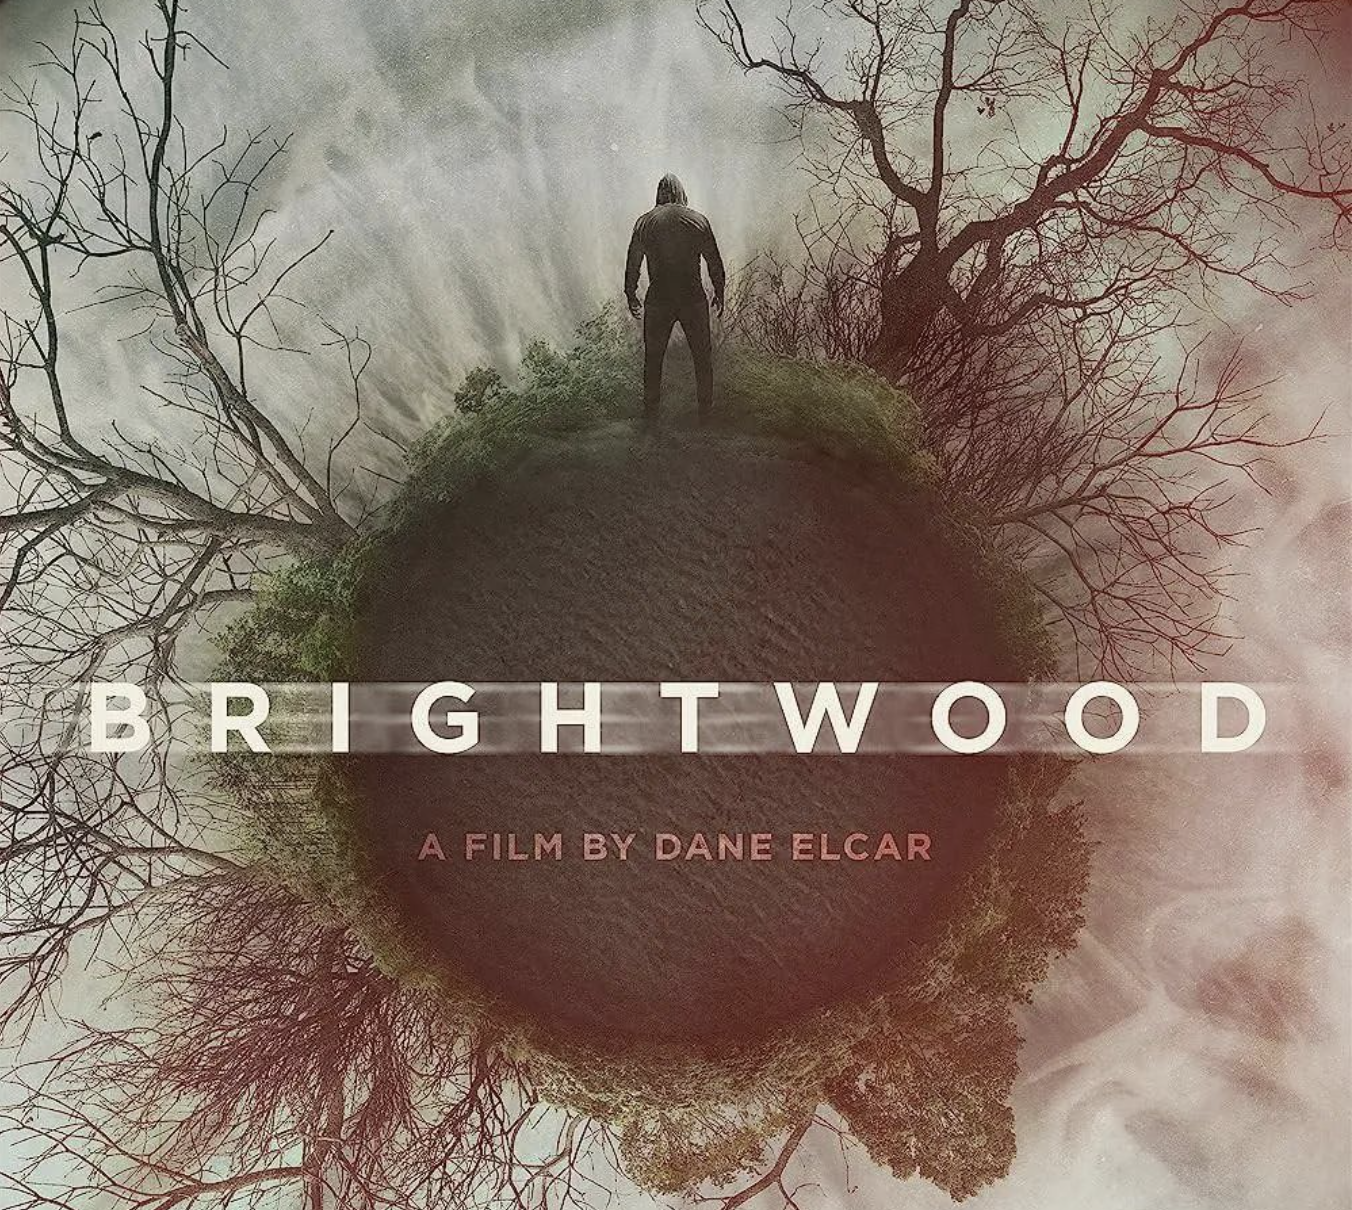 Brightwood 2023